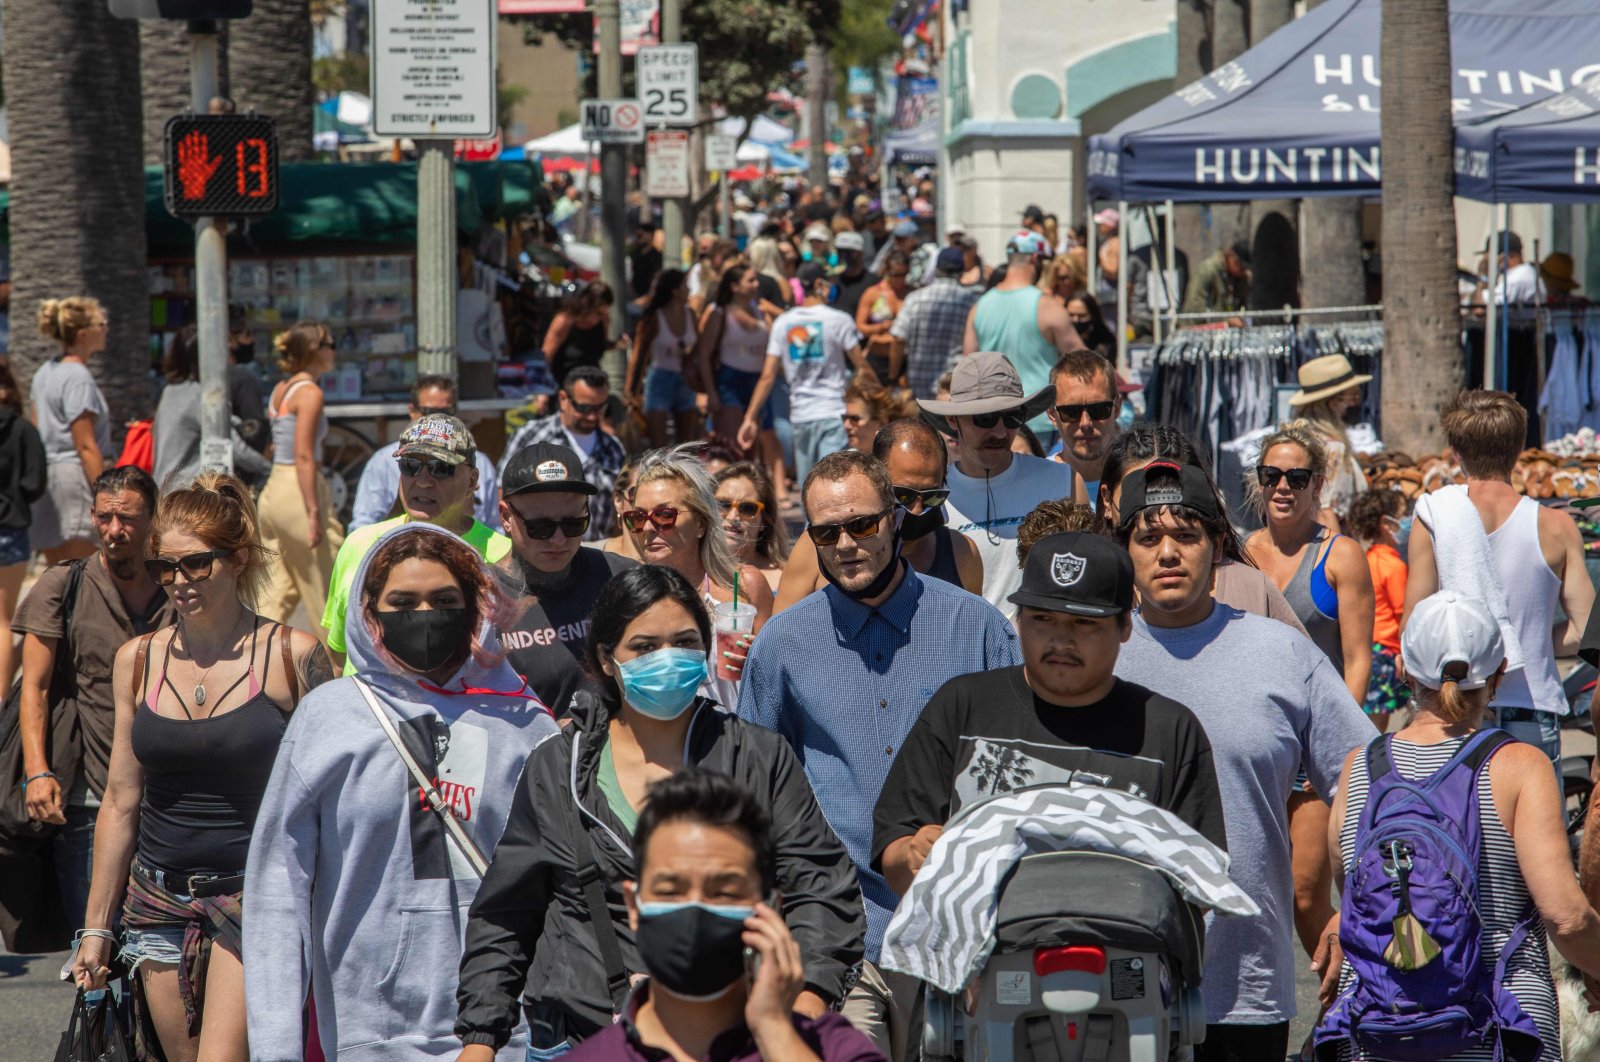 People cross the street in Huntington Beach, California, July 19, 2020. (AFP Photo)